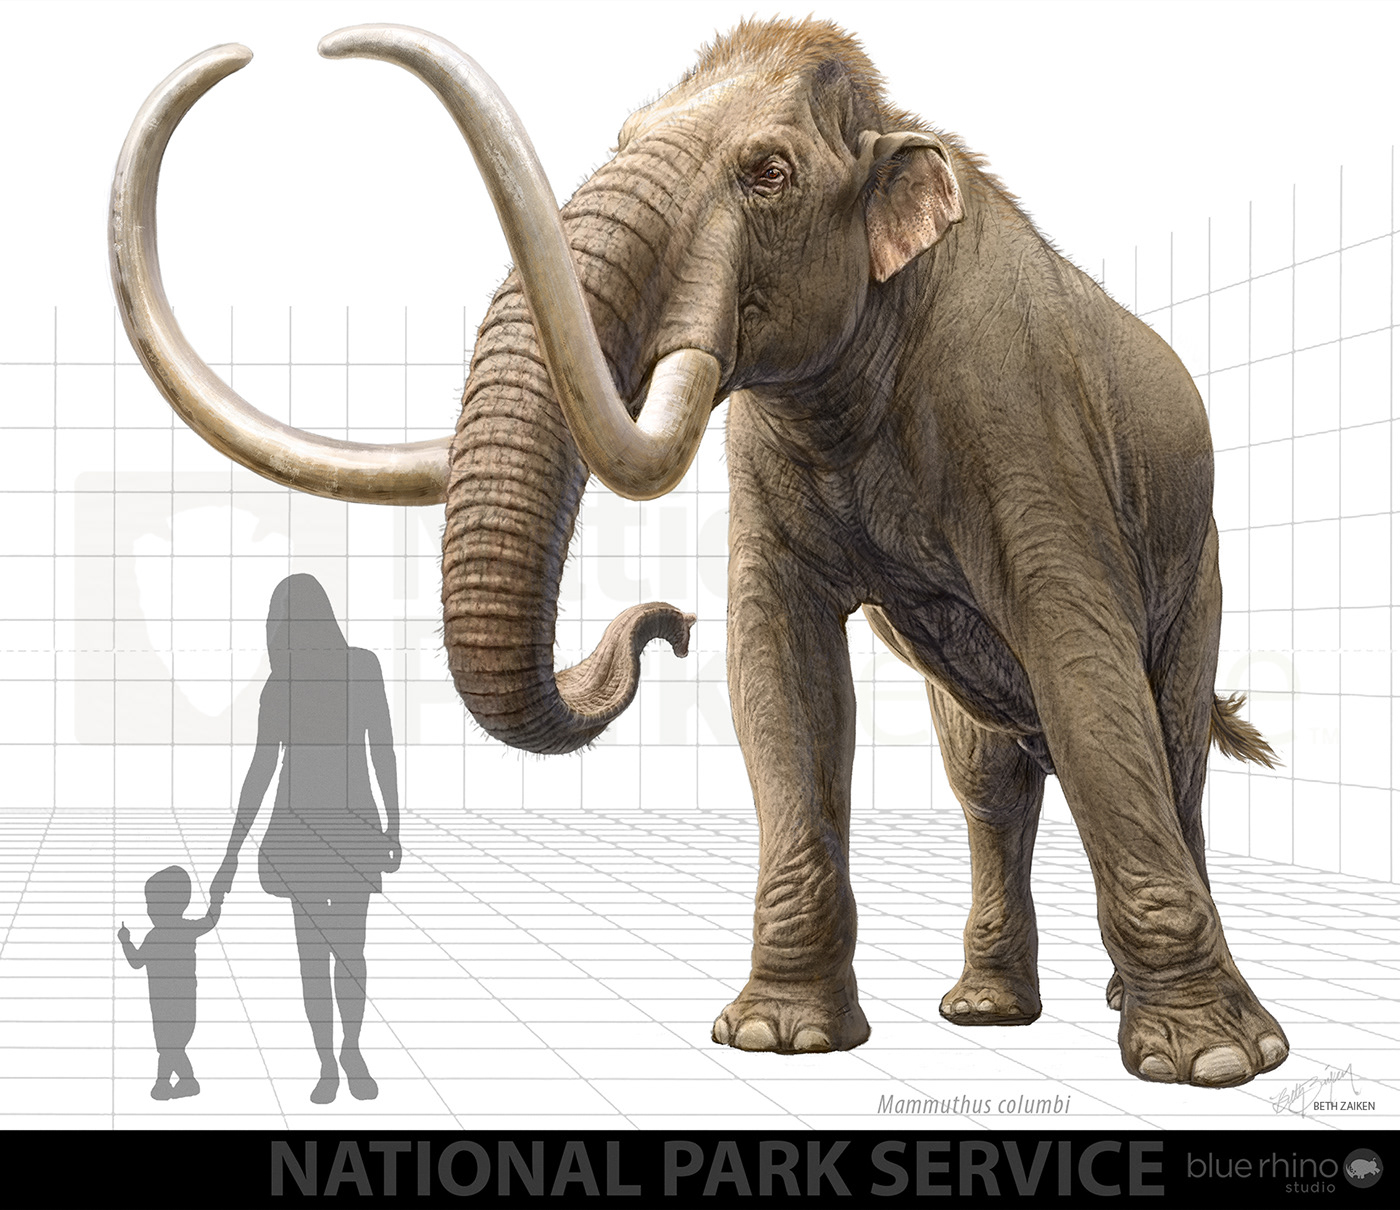 Fossil horse ice age mammoth national parks nevada pleistocene Sabertooth scientific tule springs